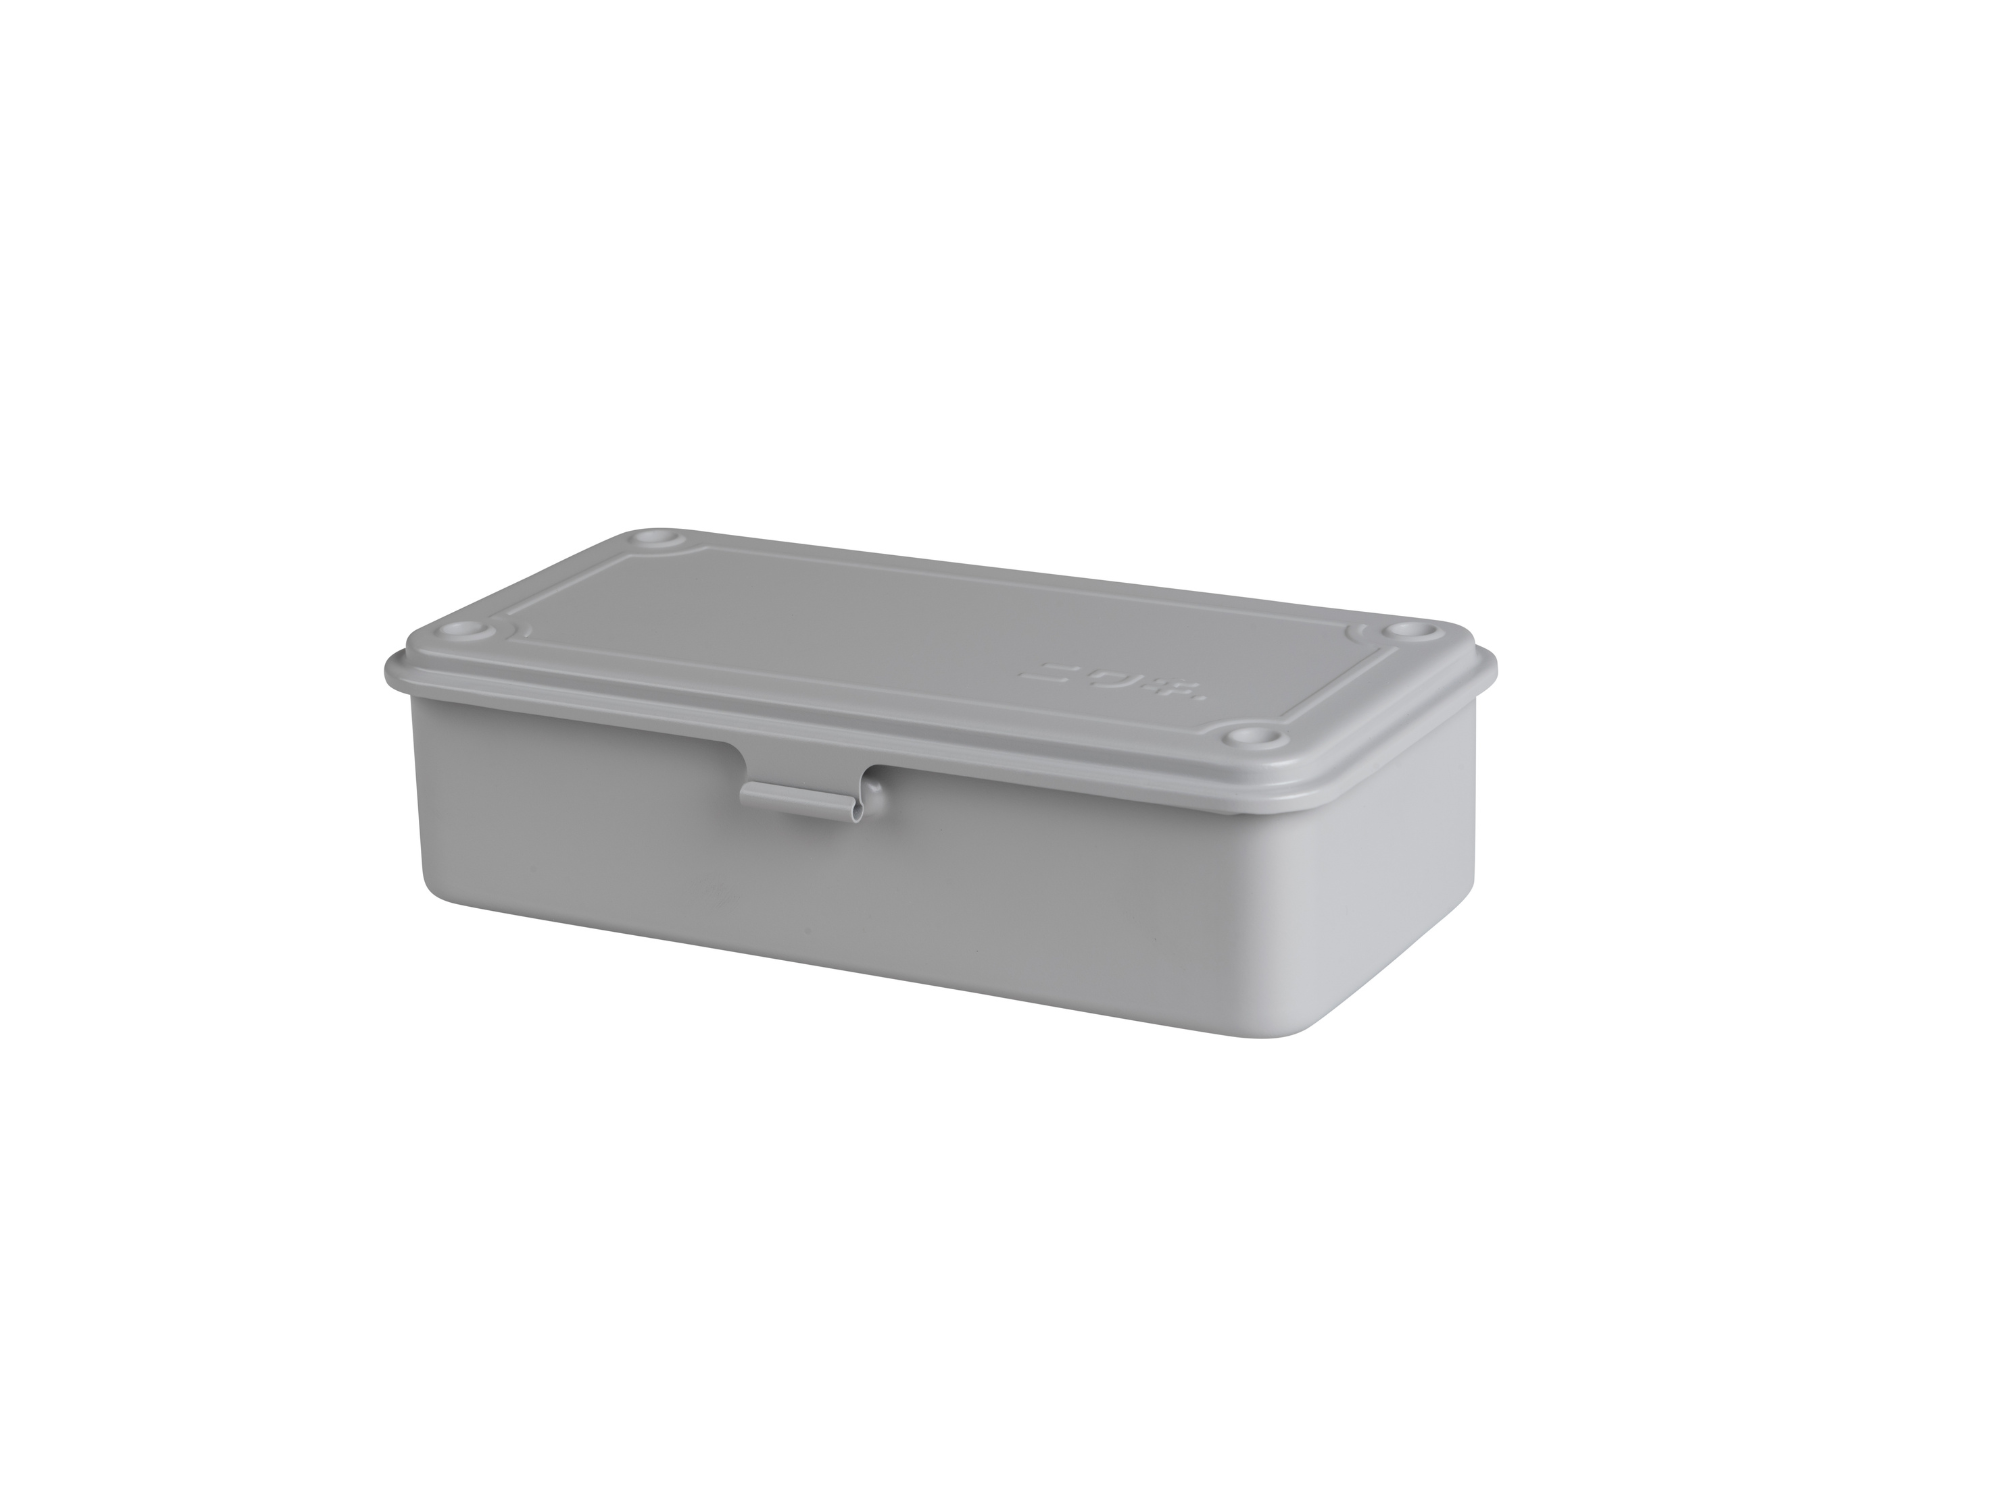 Niwaki T-Type tool box - Grey